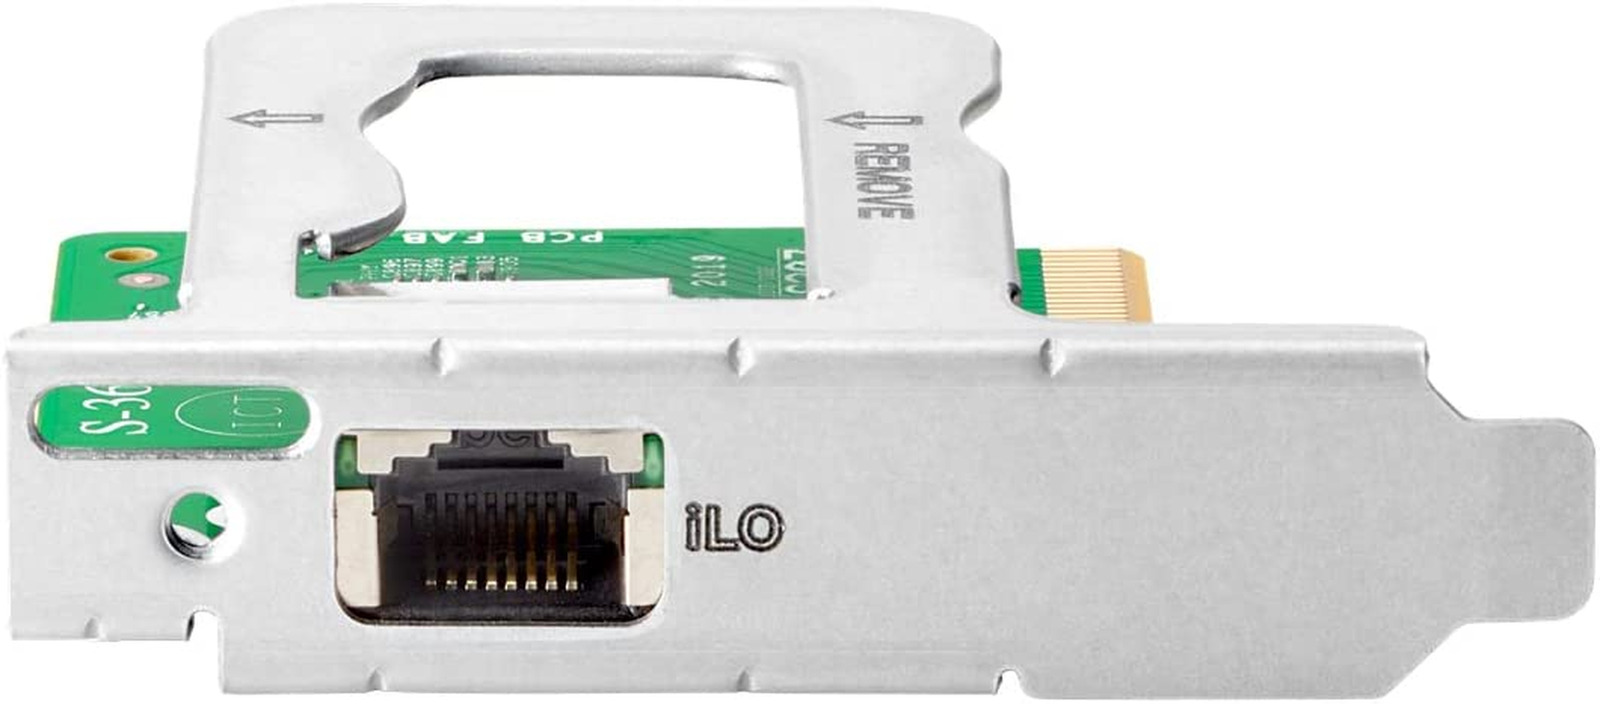 HPE Microserver Gen10 plus Ilo Enablement Kit P13788B21